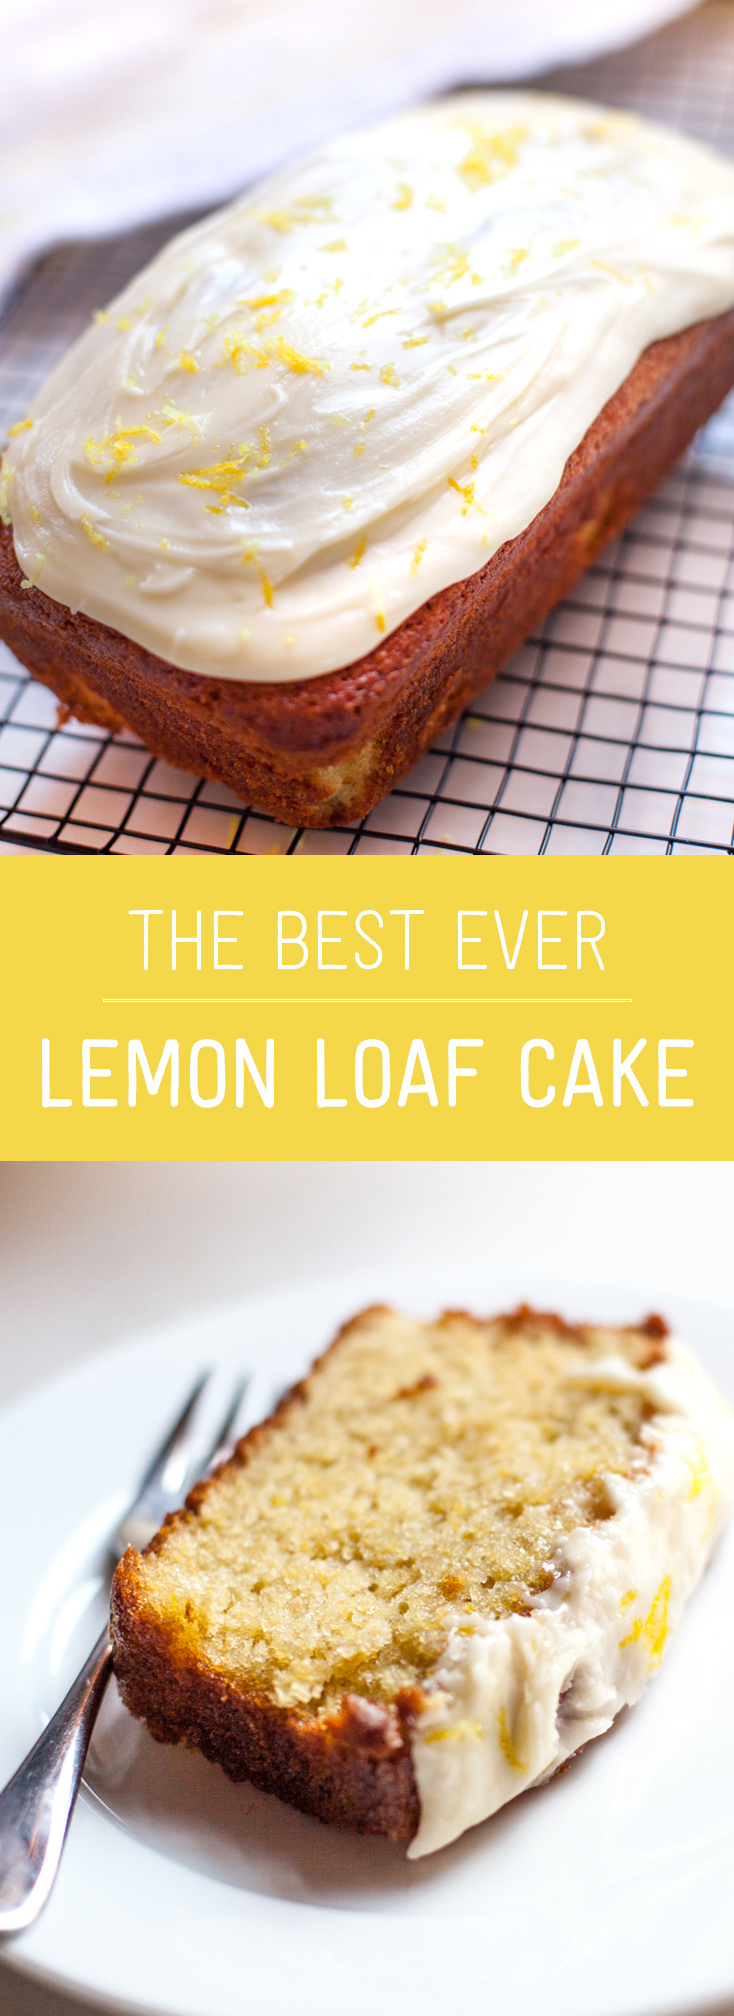 Best Ever Lemon Loaf Cake - So easy, so delicious and moist. Full of real lemon flavour.